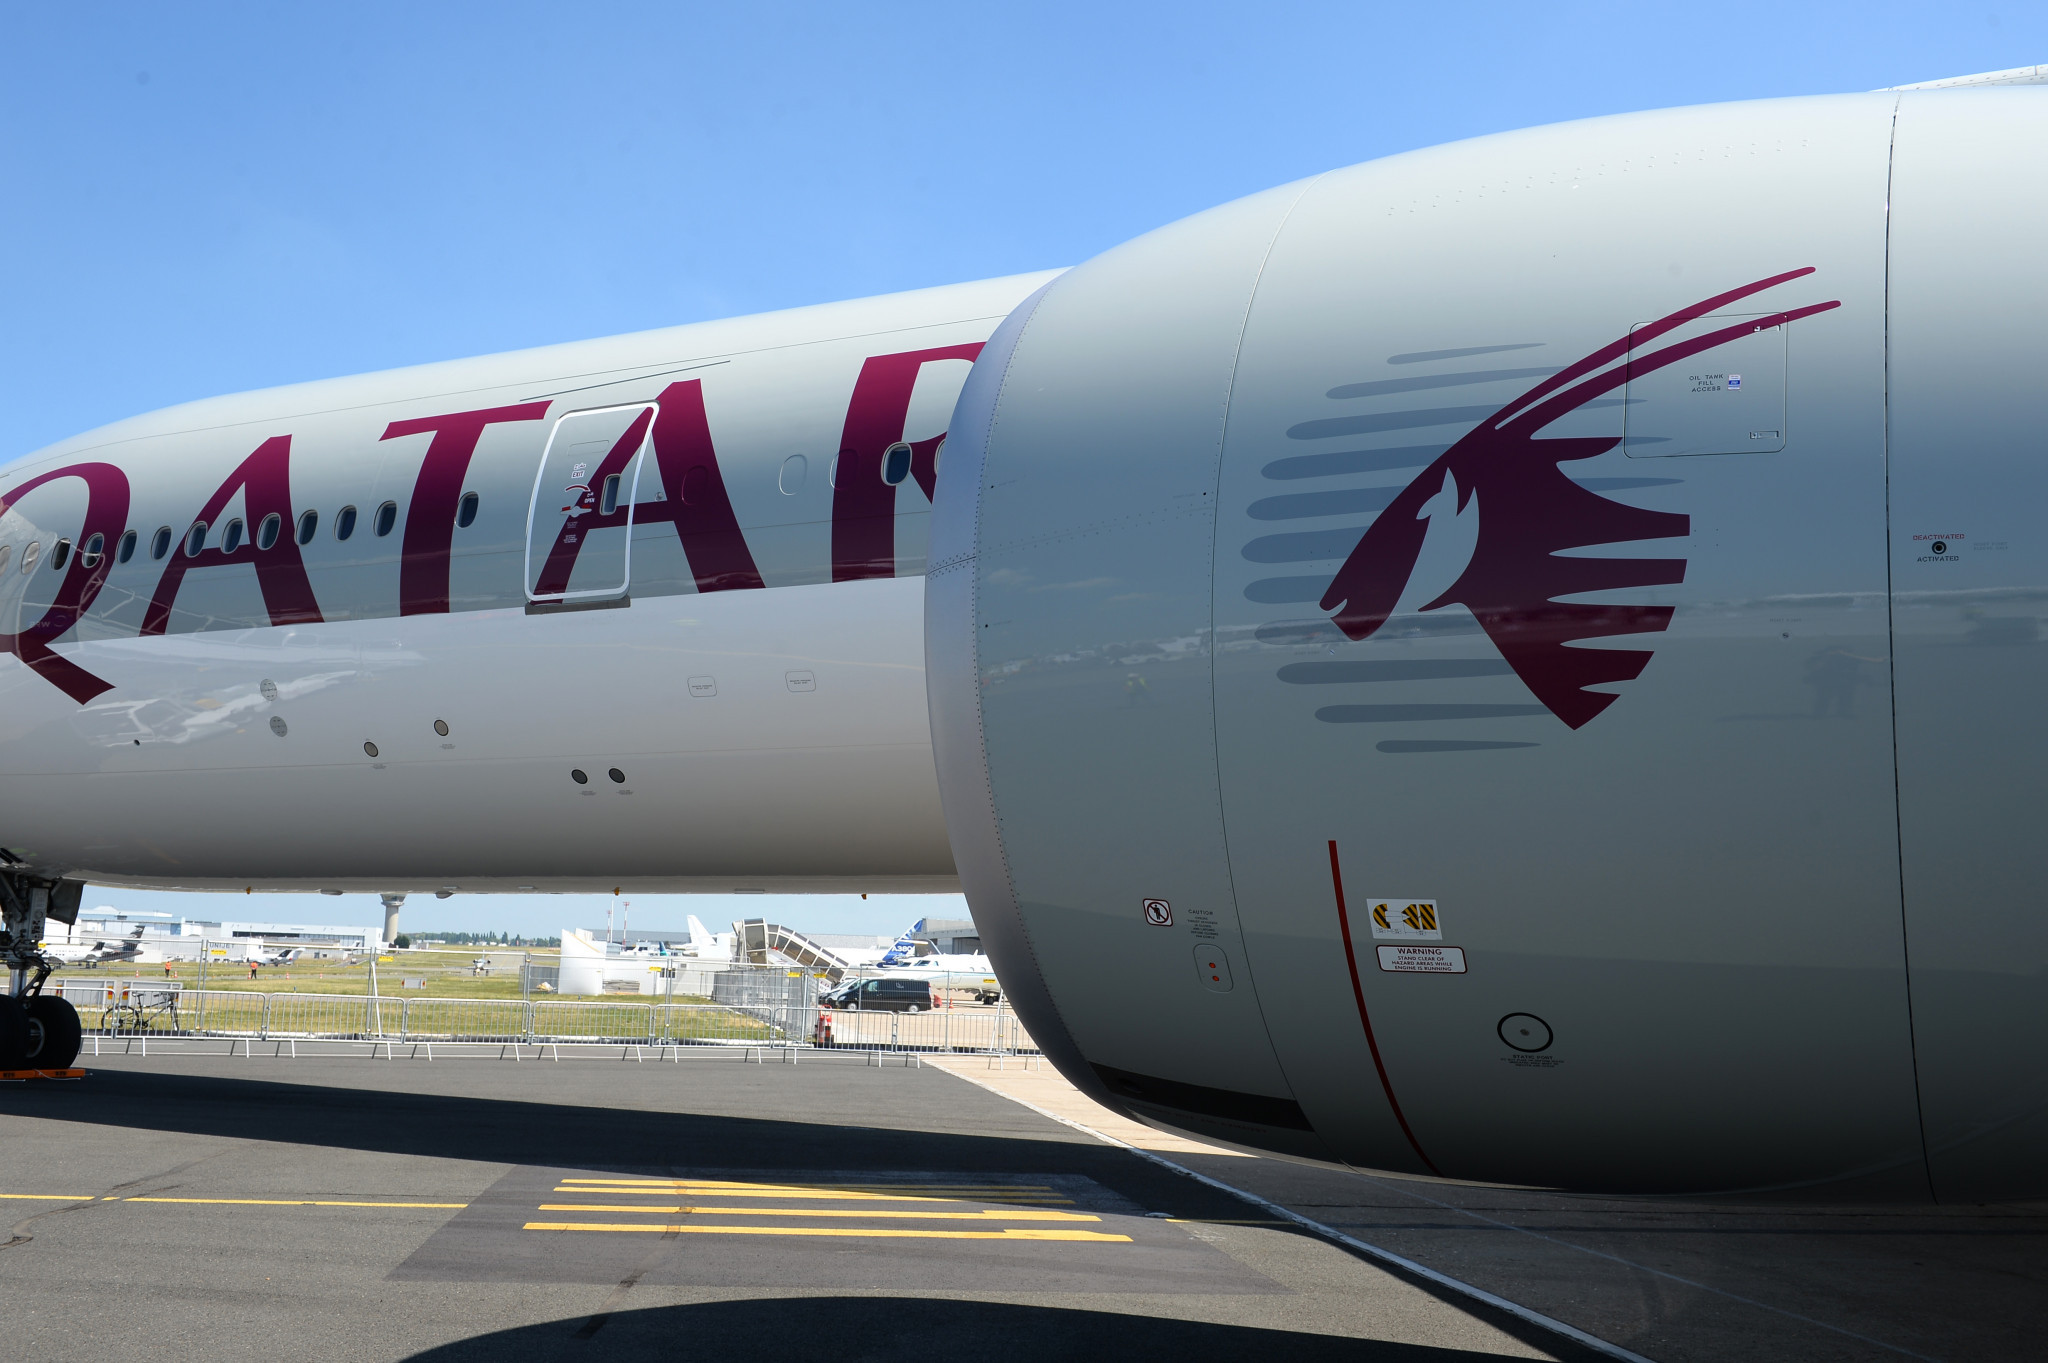 Leading sports sponsor Qatar Airways lands $2 billion advance after "difficult" year